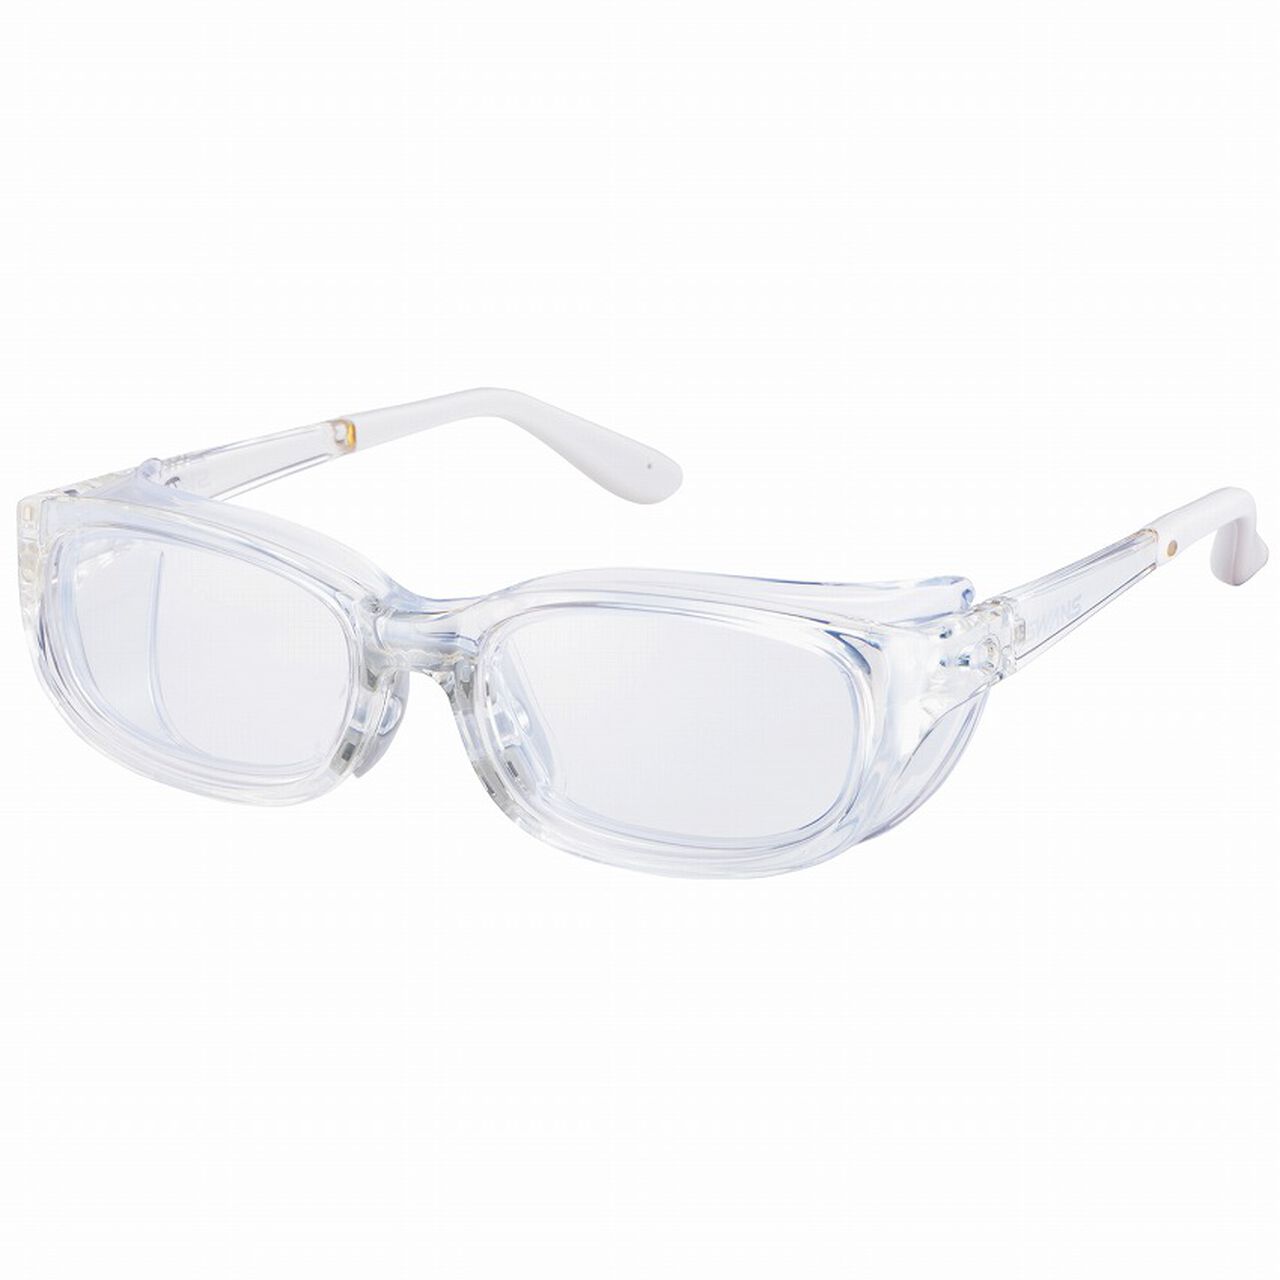 SWKJ AMZ-SWKJ-01 JR Anti-pollen glasses,Opt1, large image number 0